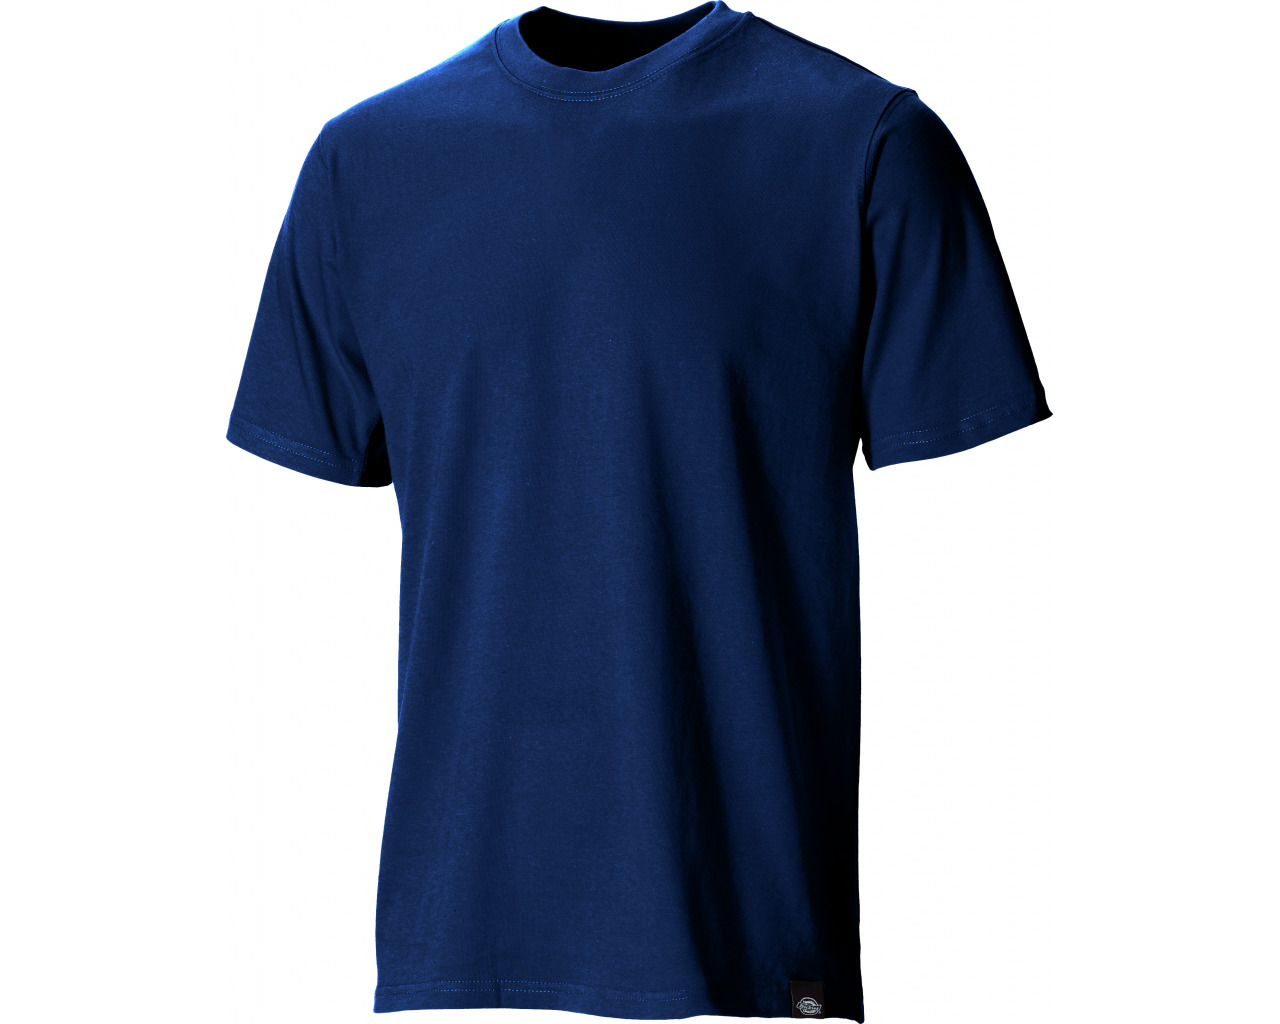 Navy Blue Shirt Mockup